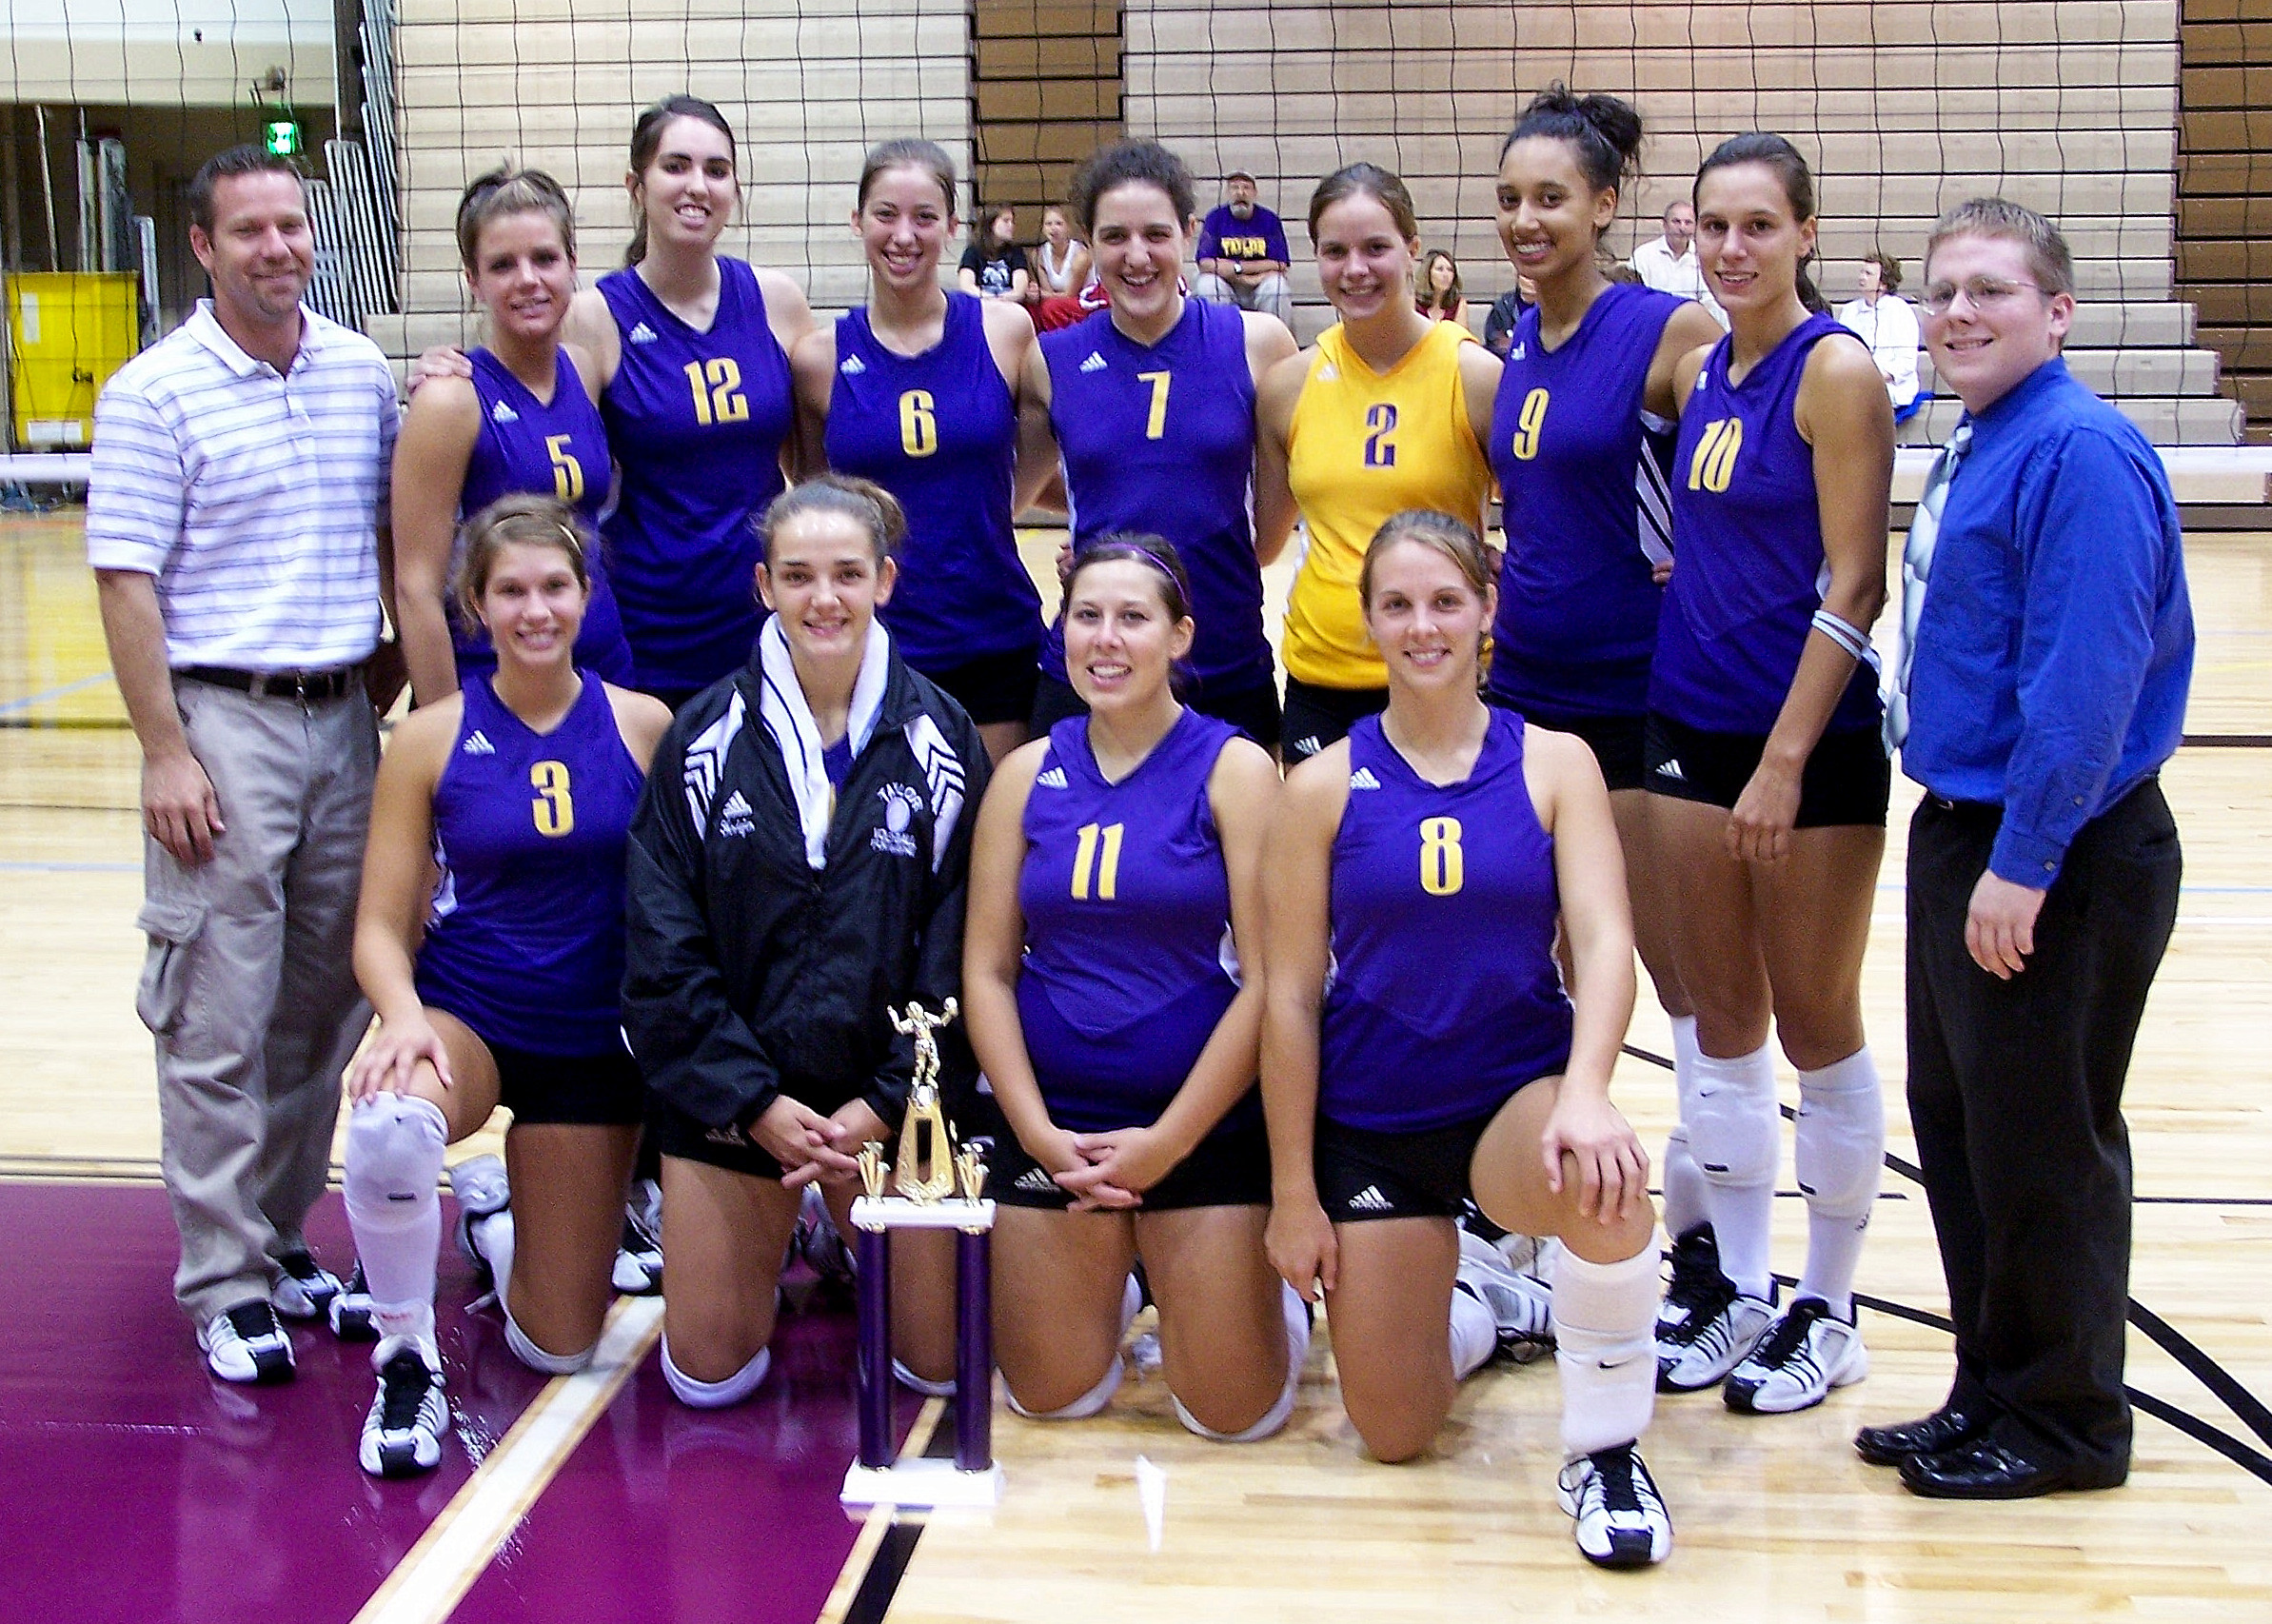 2006 team